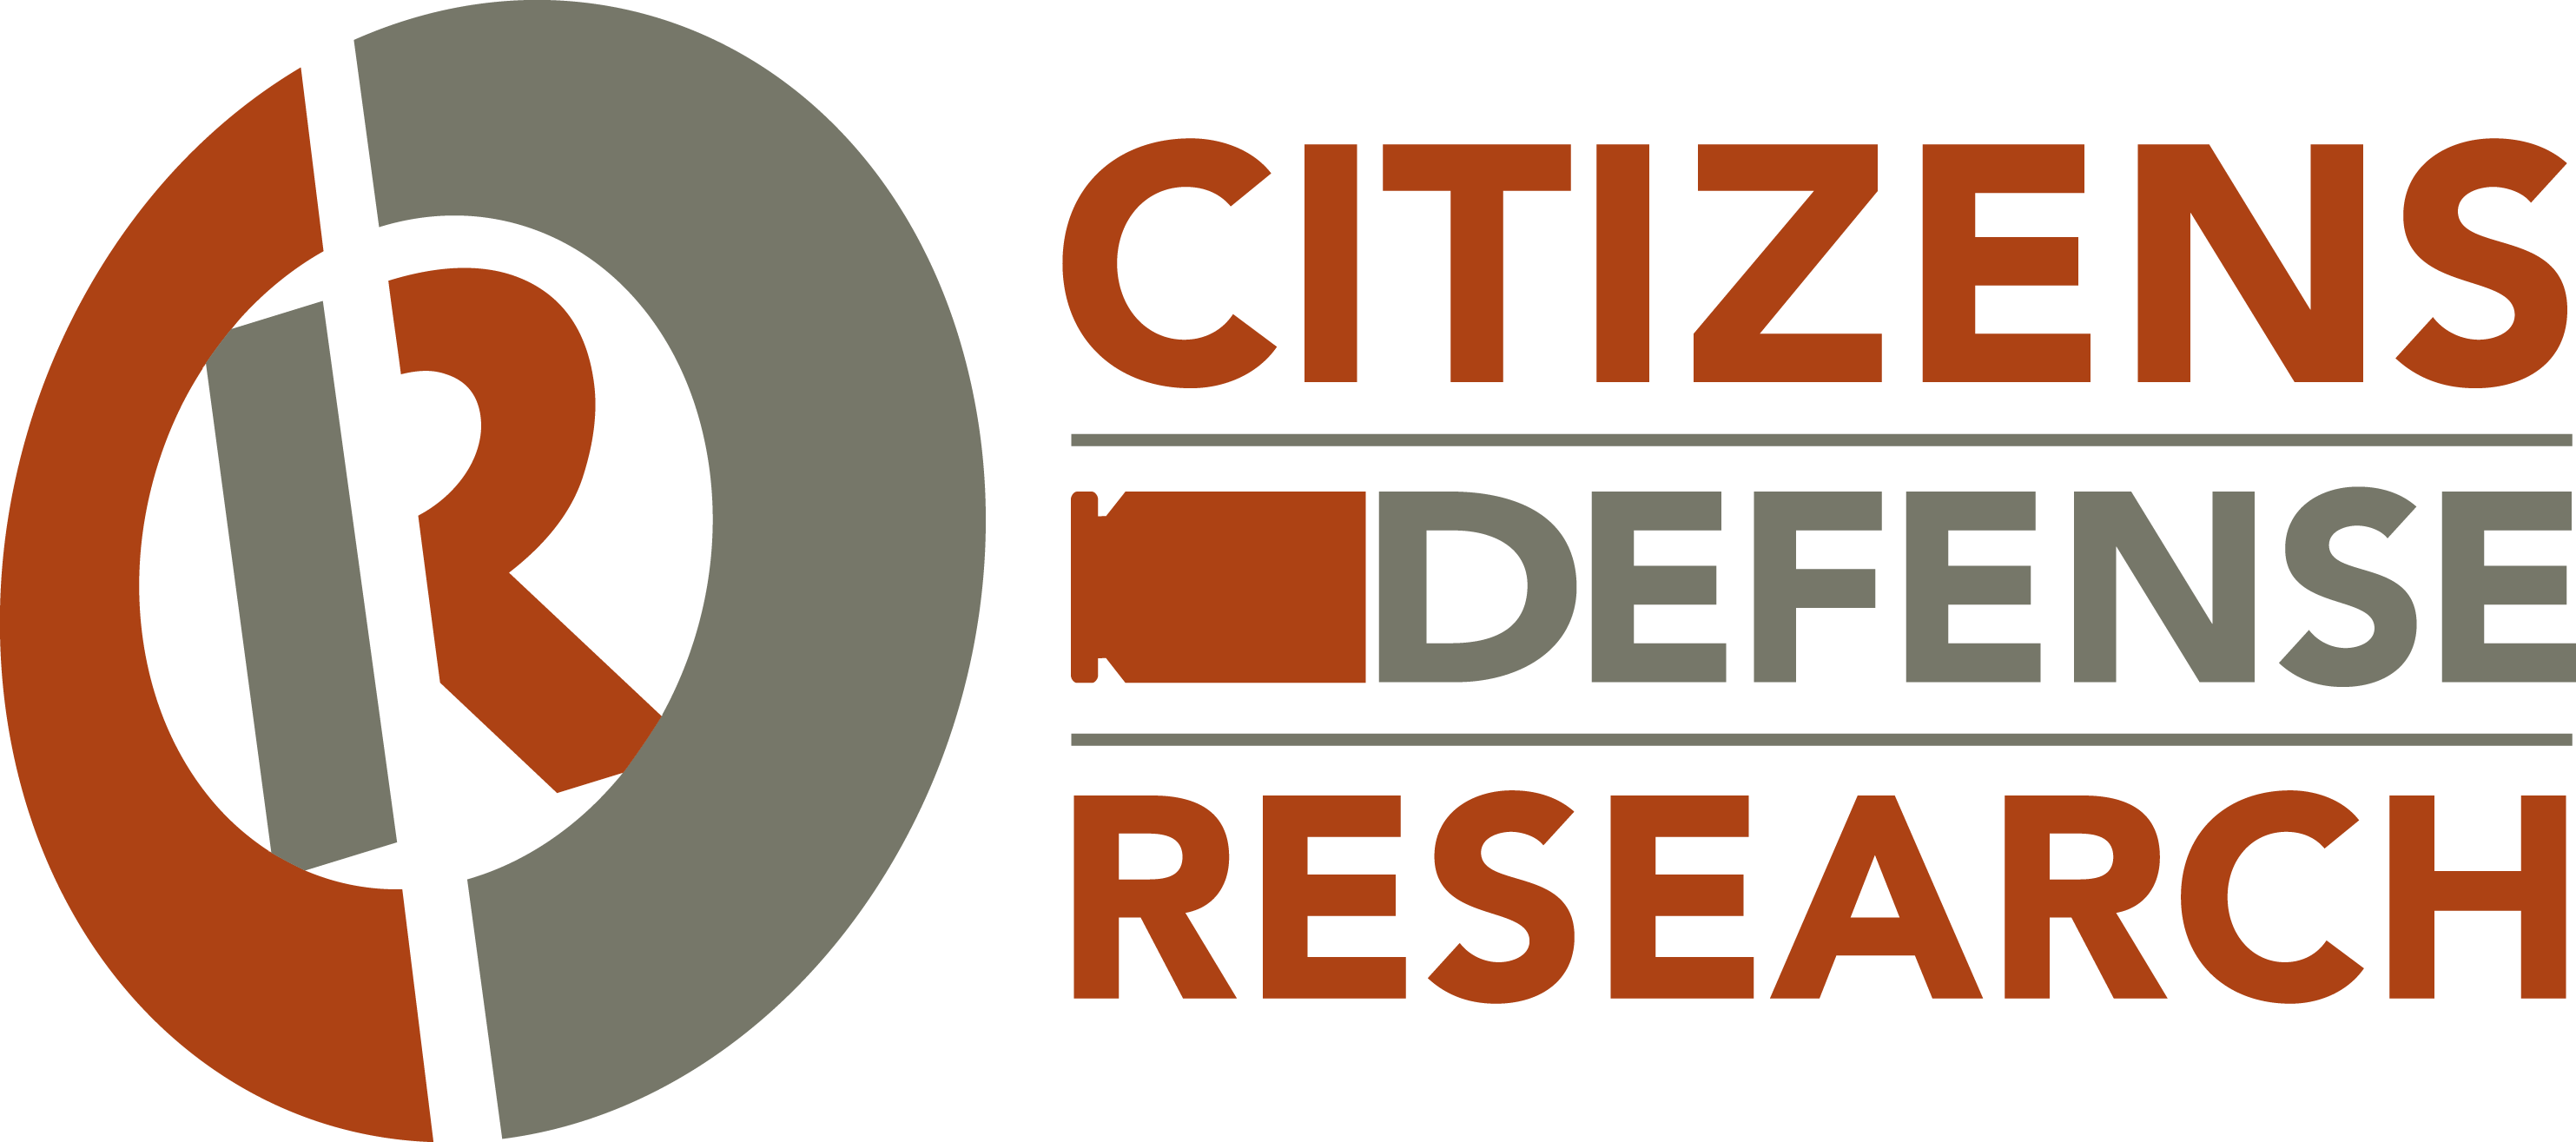 Citizens Defense Research